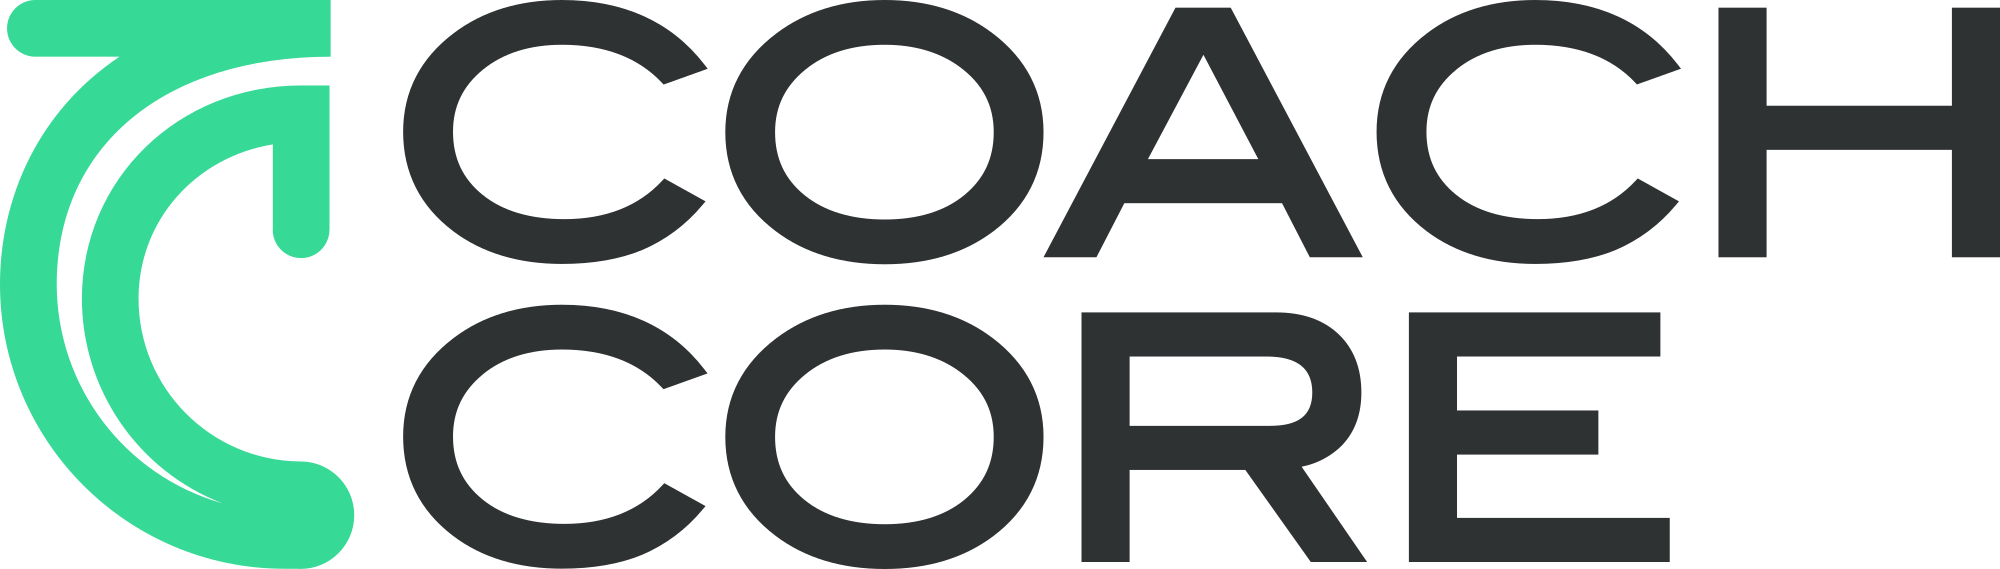 Coach Core Foundation logo